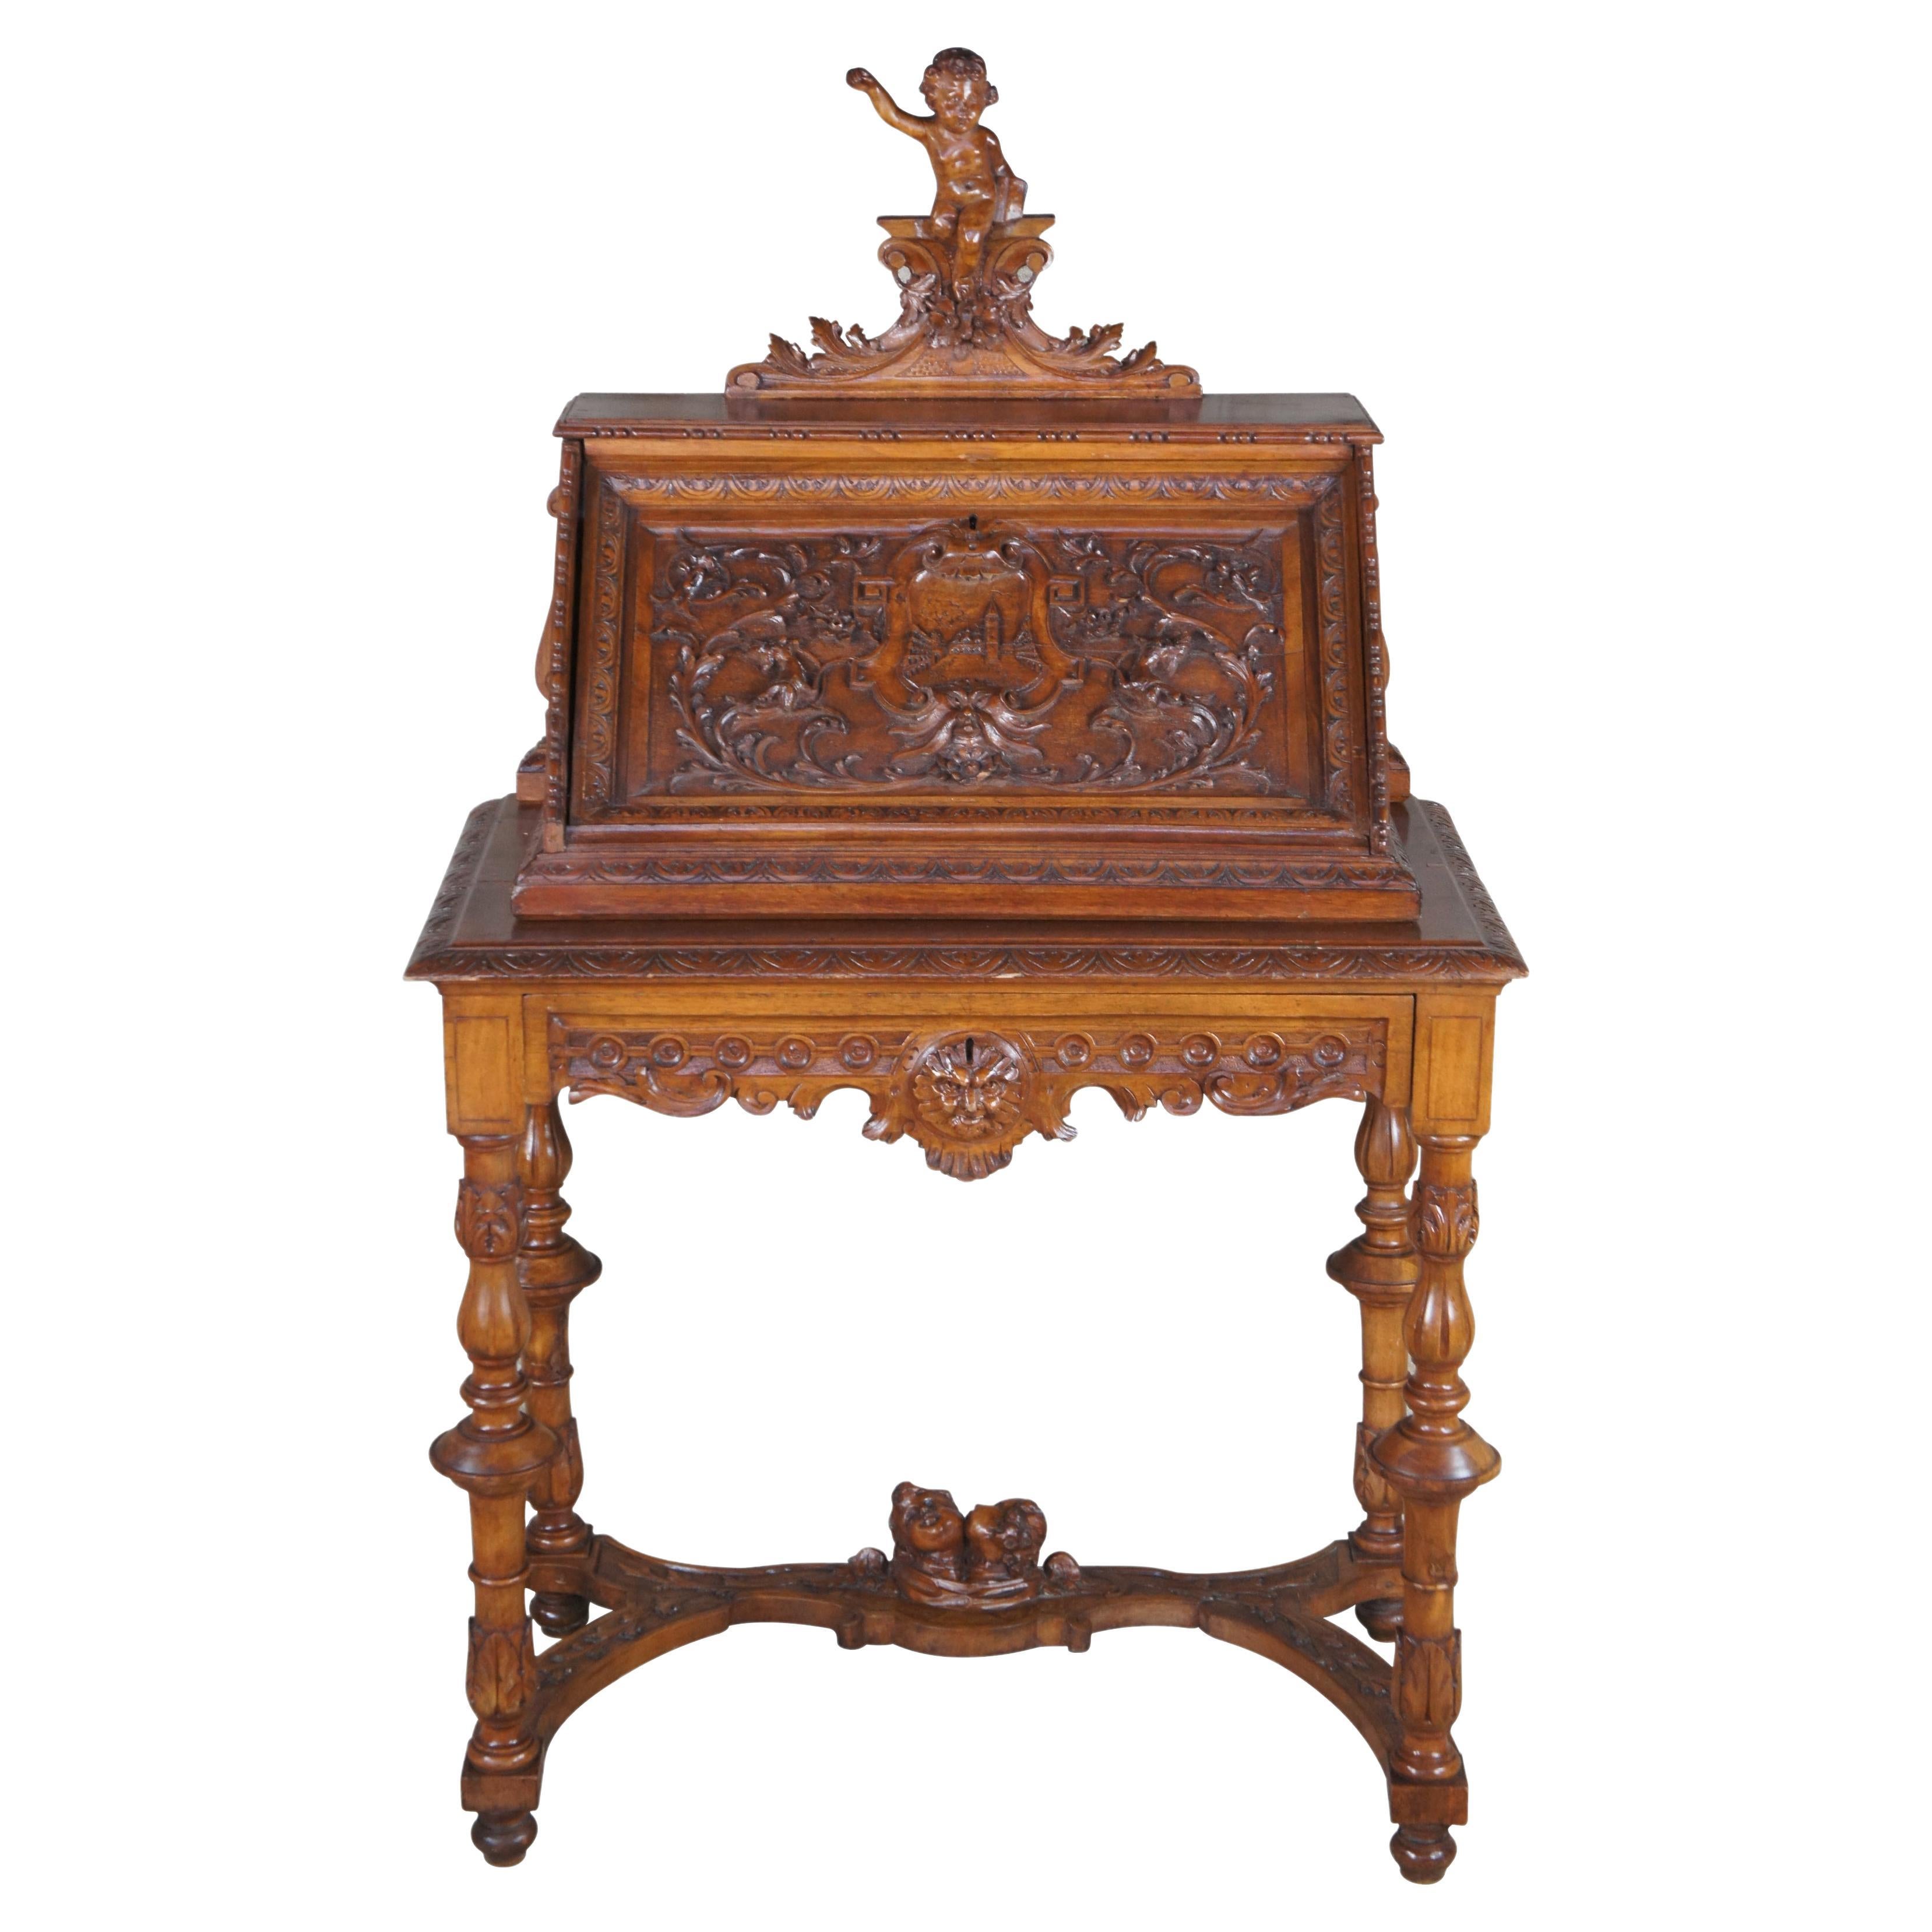 Antique Italian Renaissance Revival Walnut Figural Carved Writing Desk 52"